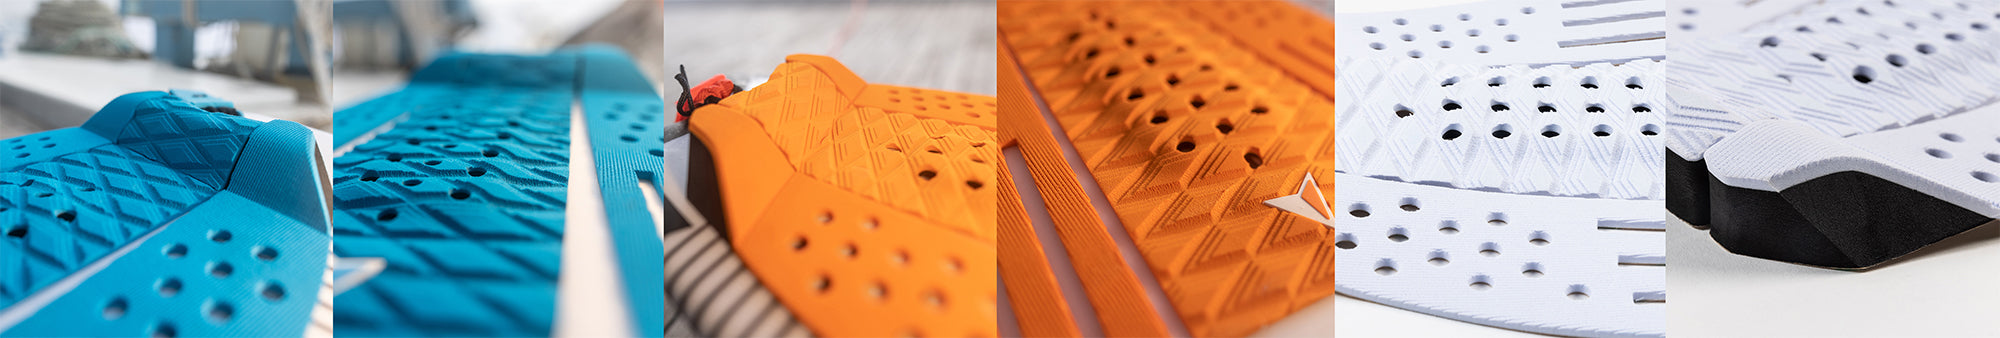 Roam 3-Piece Comp Traction Tail Pad Details